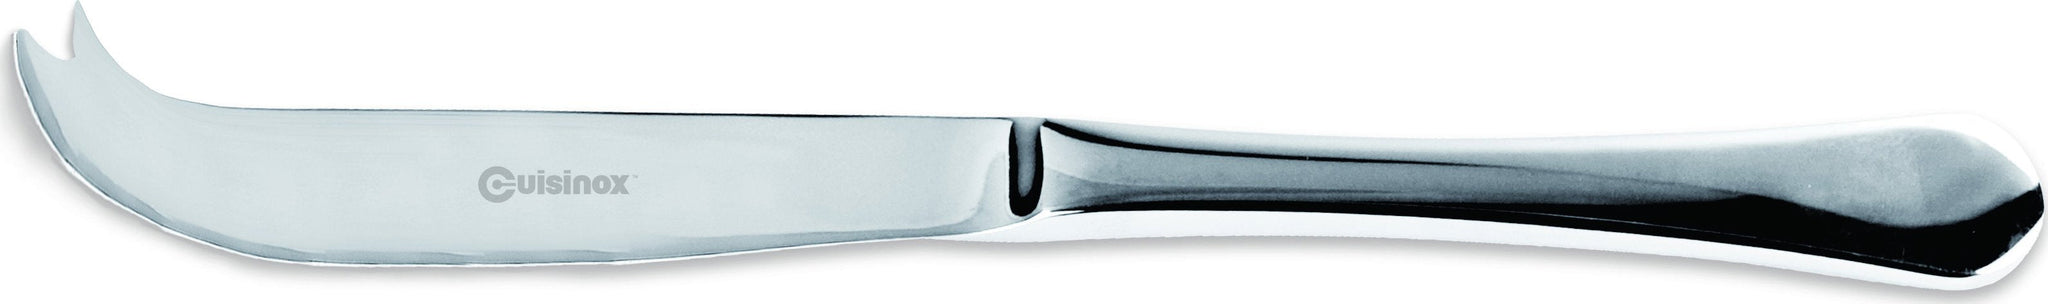 Cuisinox - 7.5" Cheese Knife (20cm) - FLA-1084-33